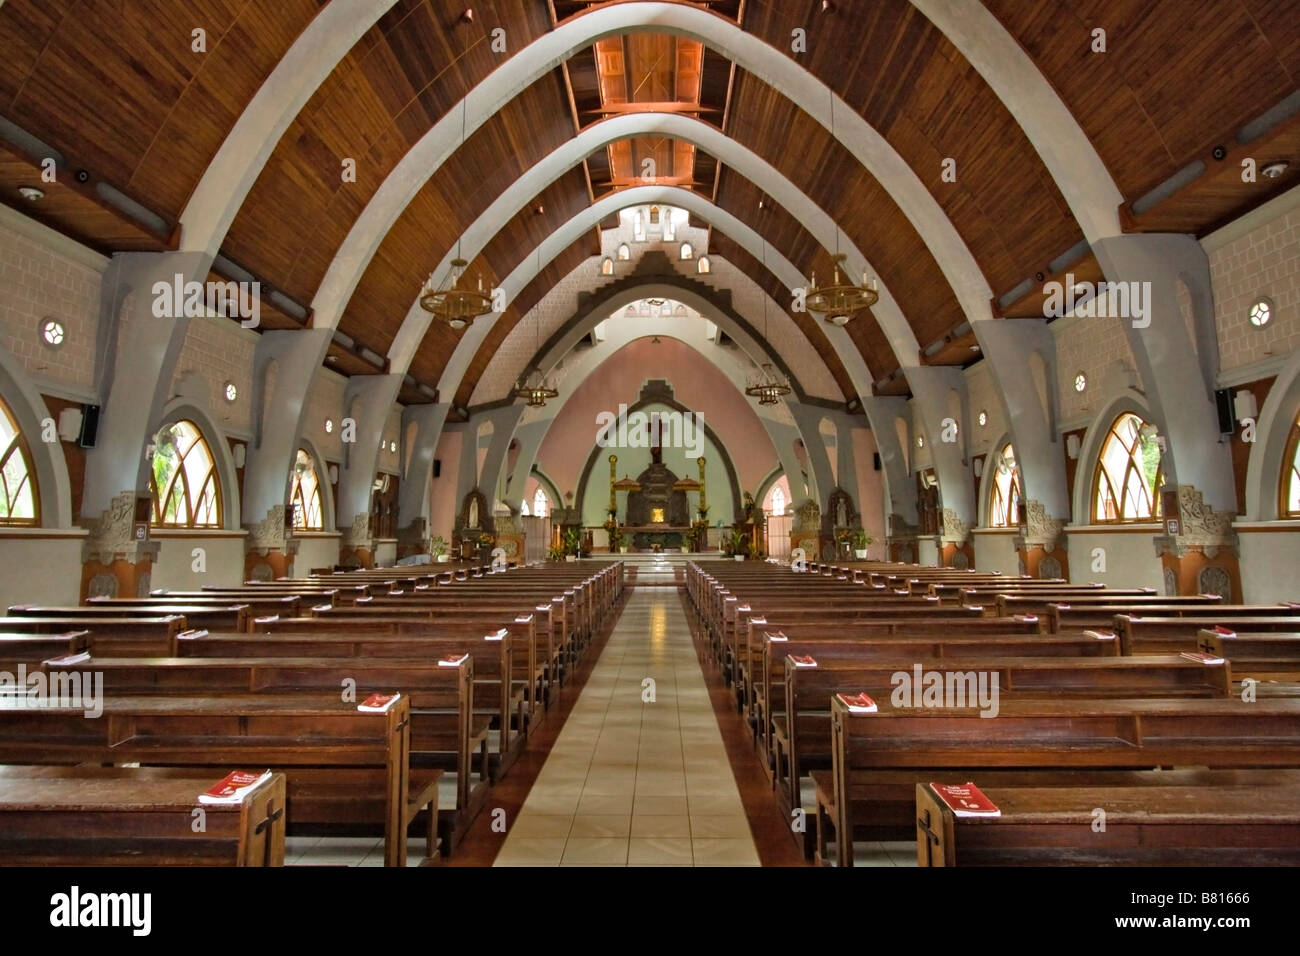 Interior of the unusual Roman Catholic church at Palasari, Bali, Indonesia Stock Photo